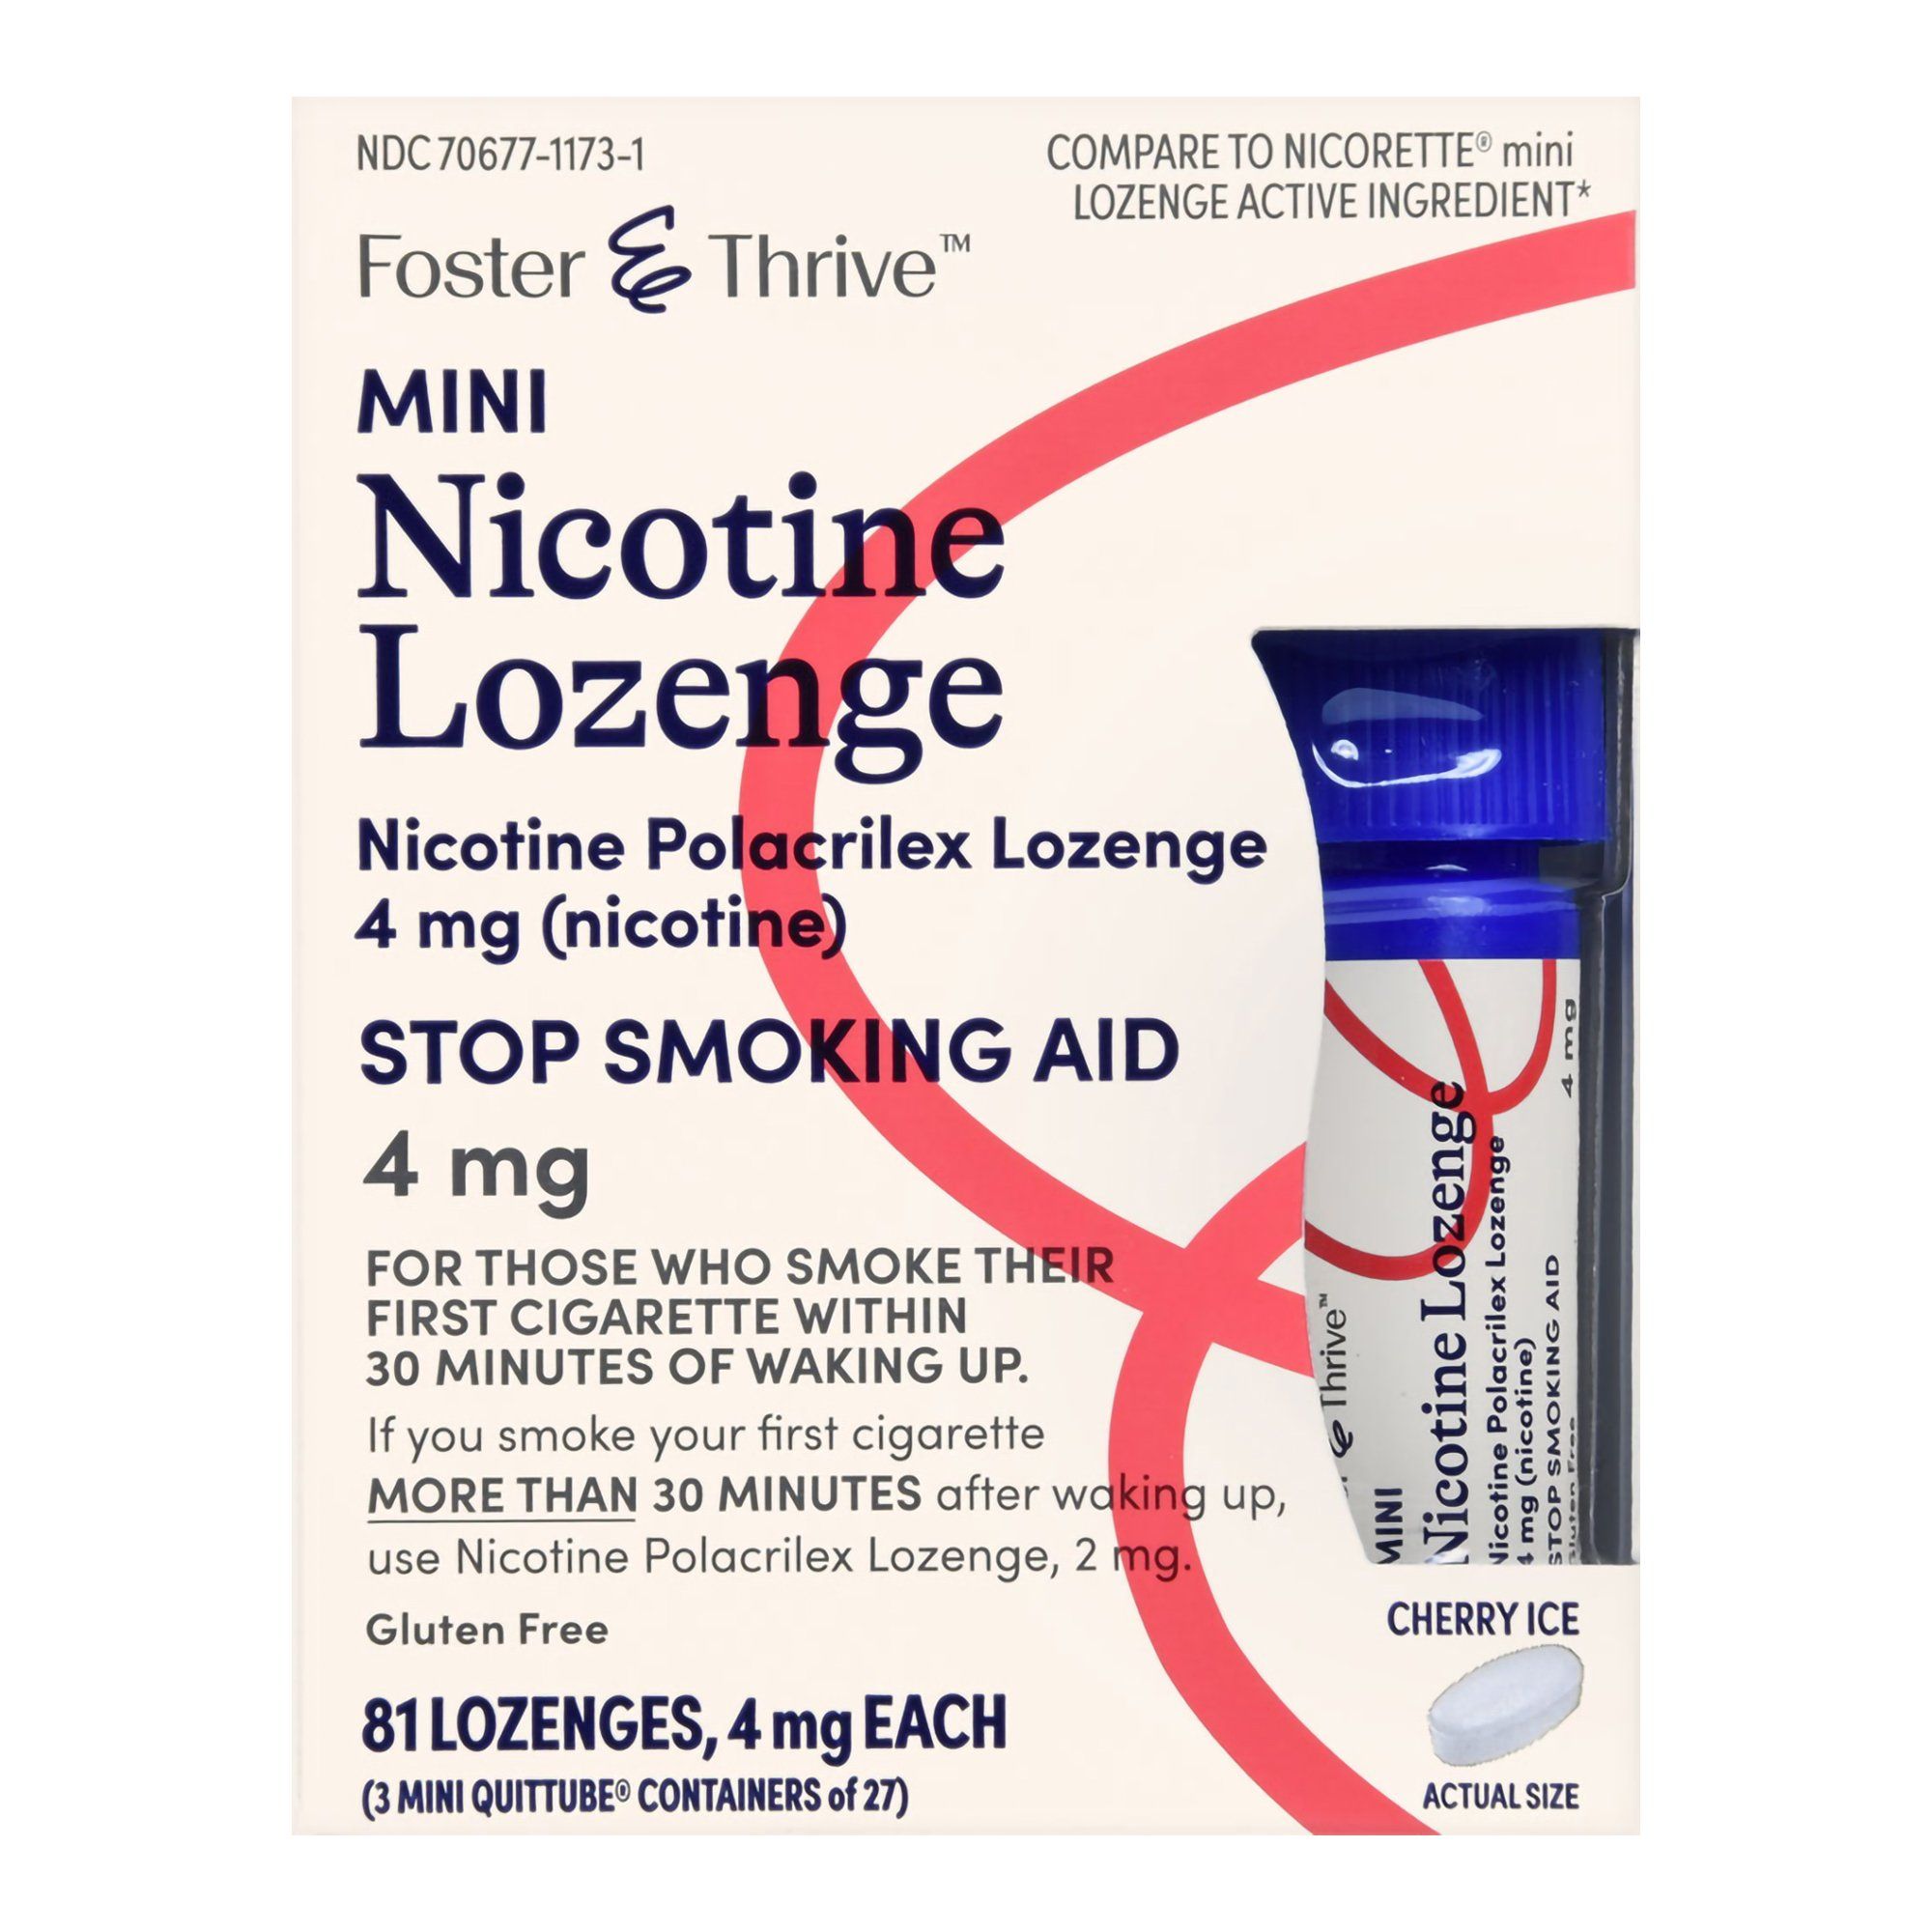 Foster & Thrive Stop Smoking Aid Mini Nicotine Lozenges, 4 mg, Cherry Ice - 81 ct